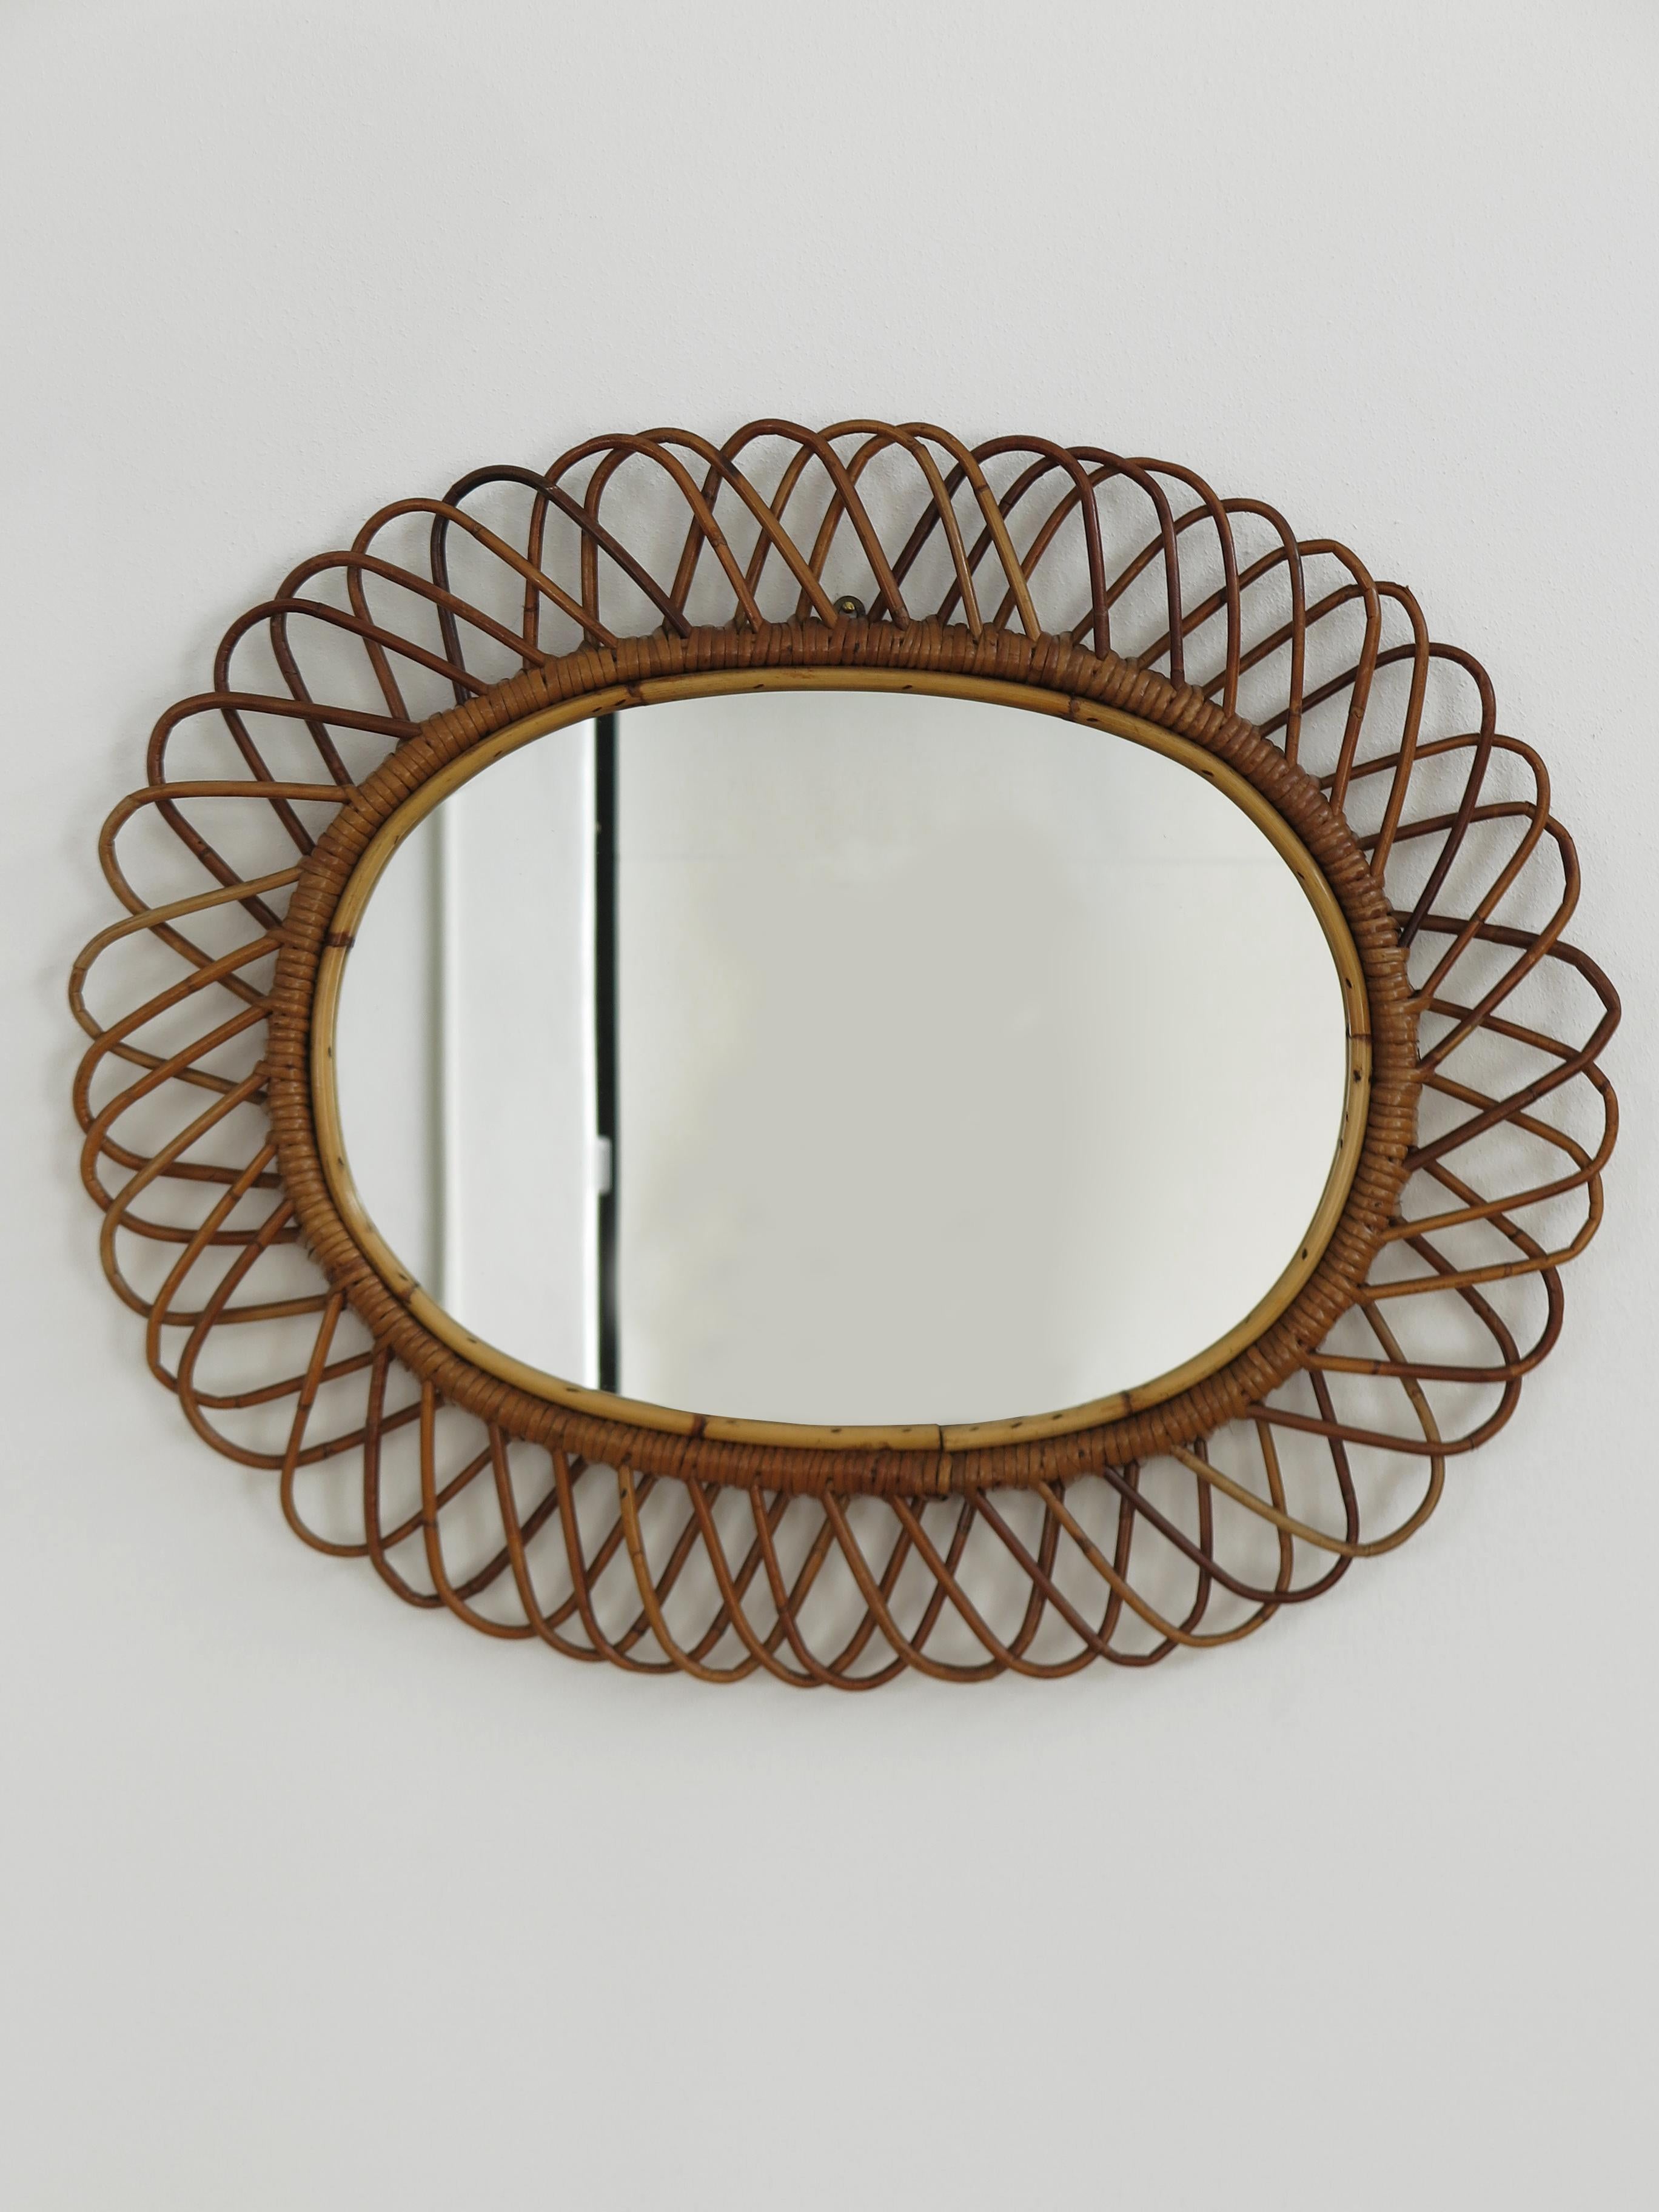 Italian Oval Bamboo Rattan Midcentury Wall Mirror, 1950s For Sale 3